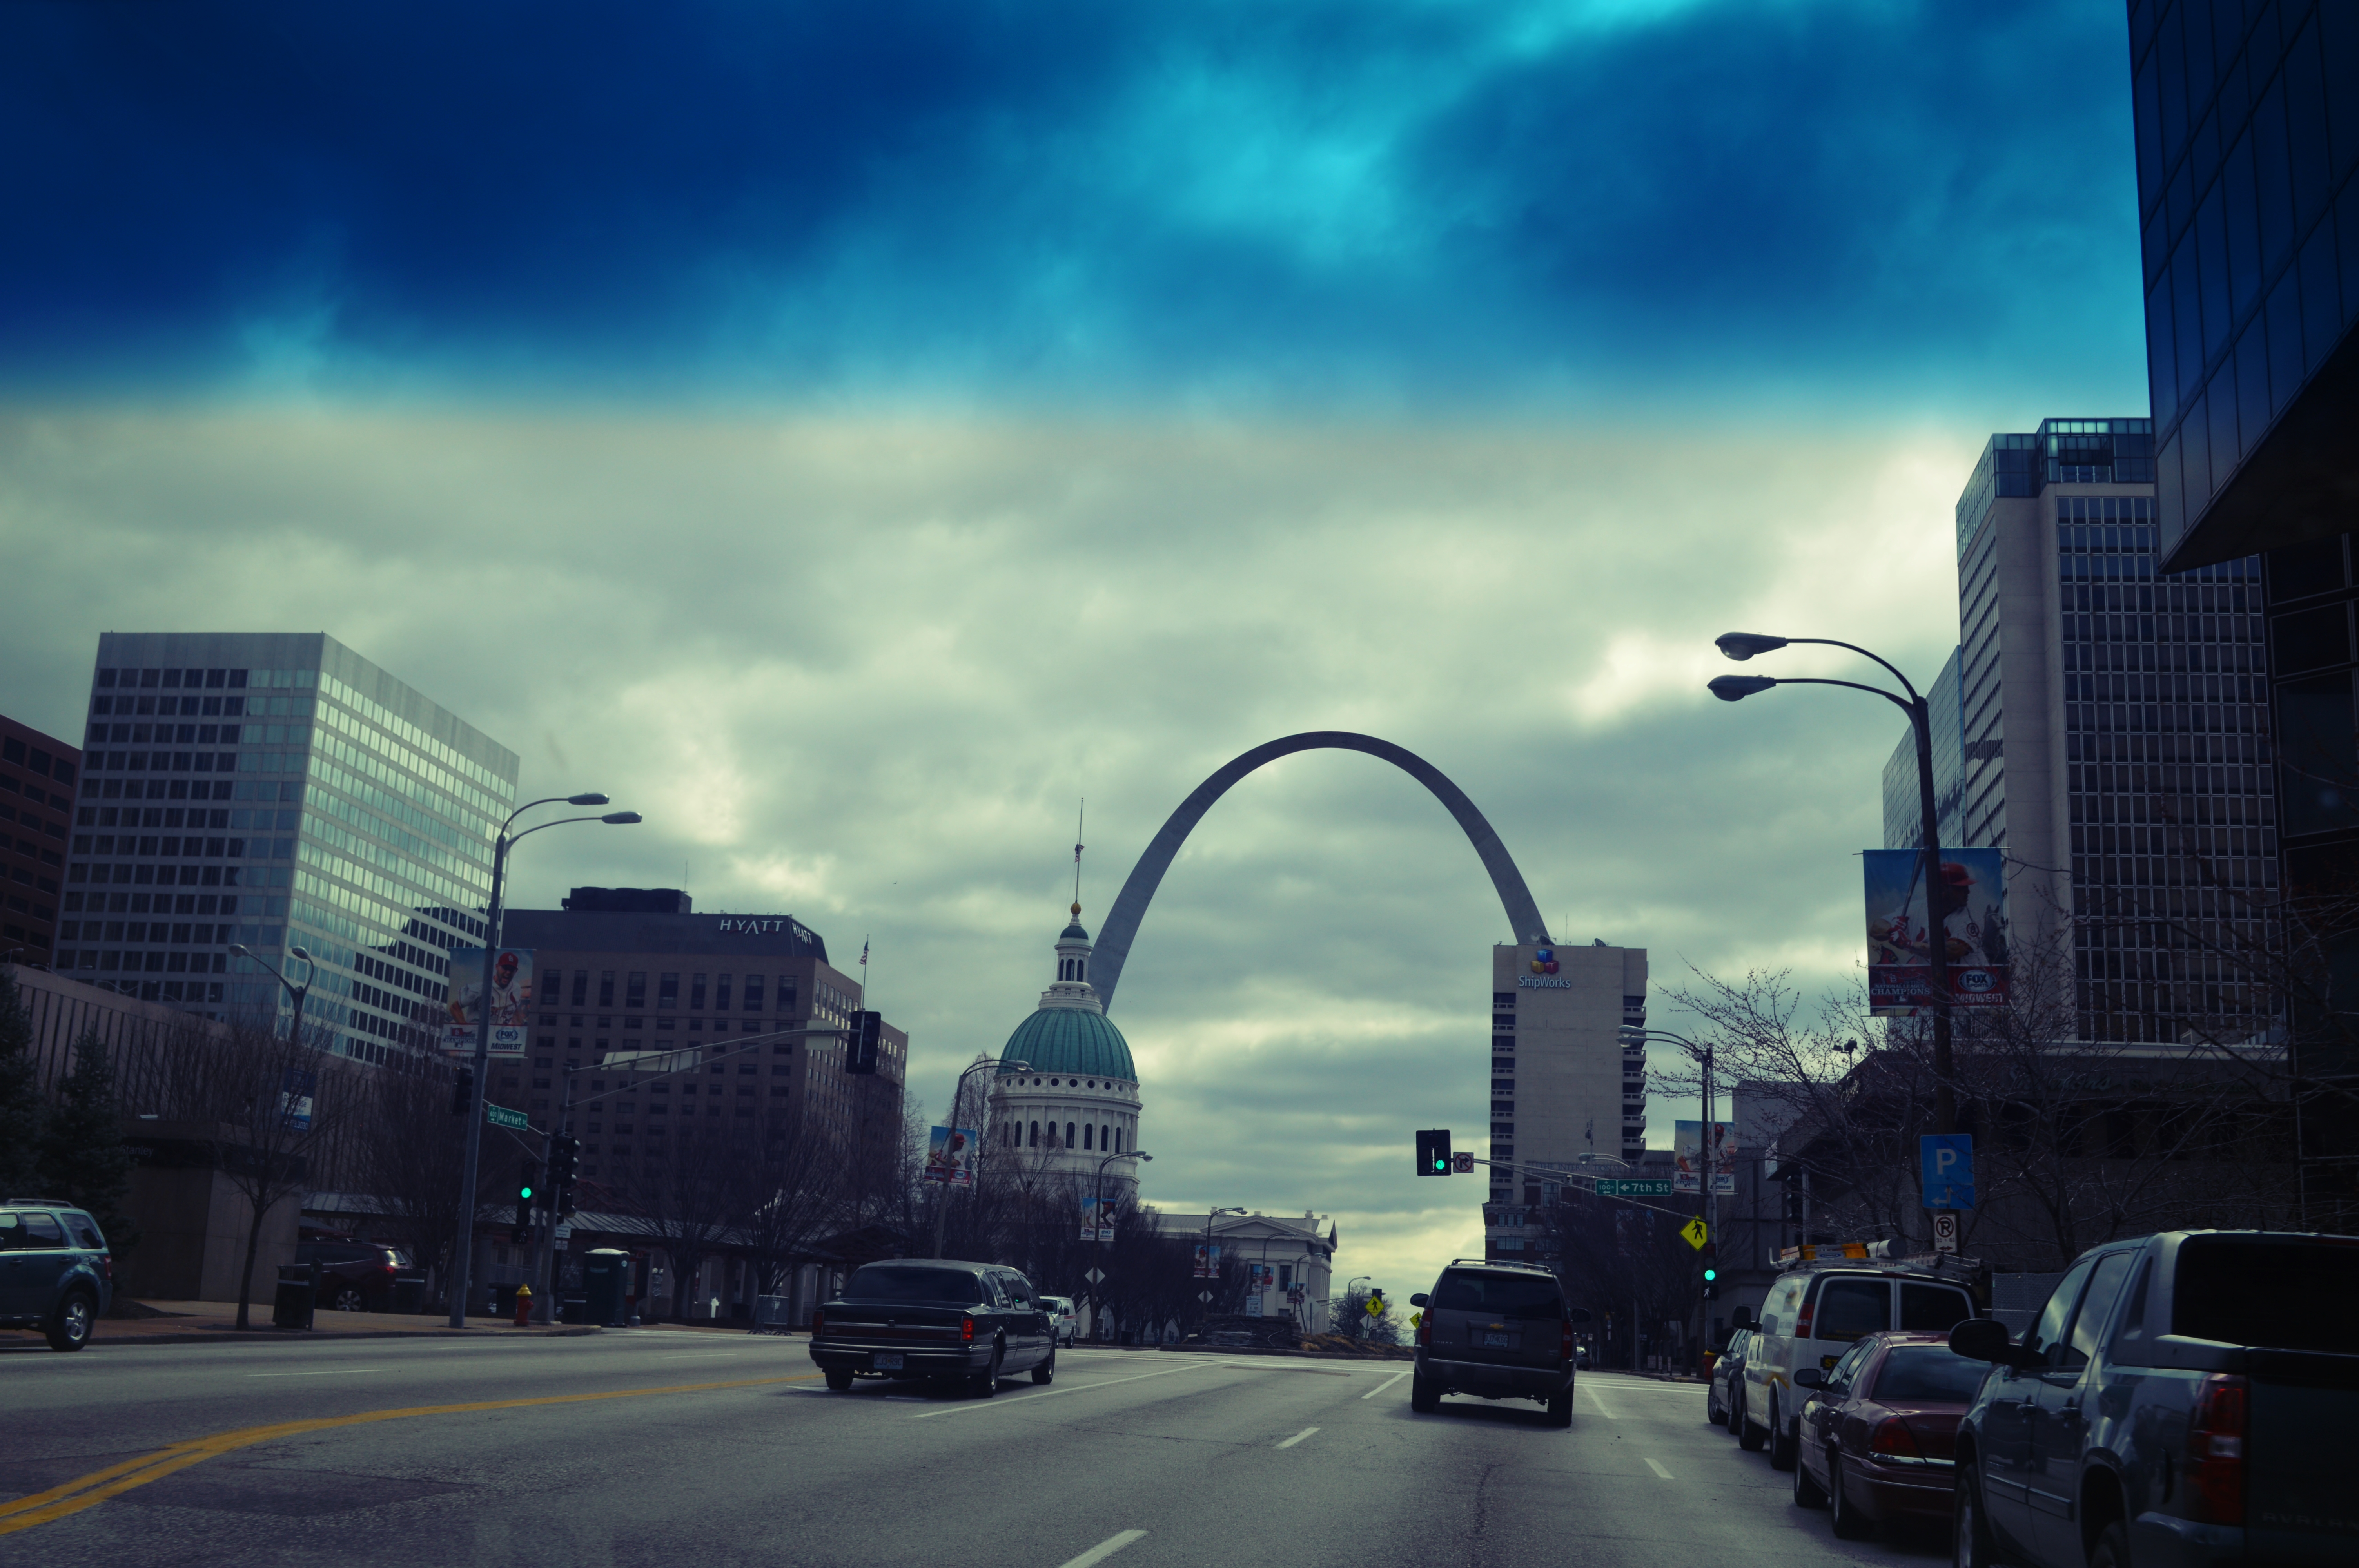 Silent Sunday – St. Louis Gateway Arch | My Journey So Far….